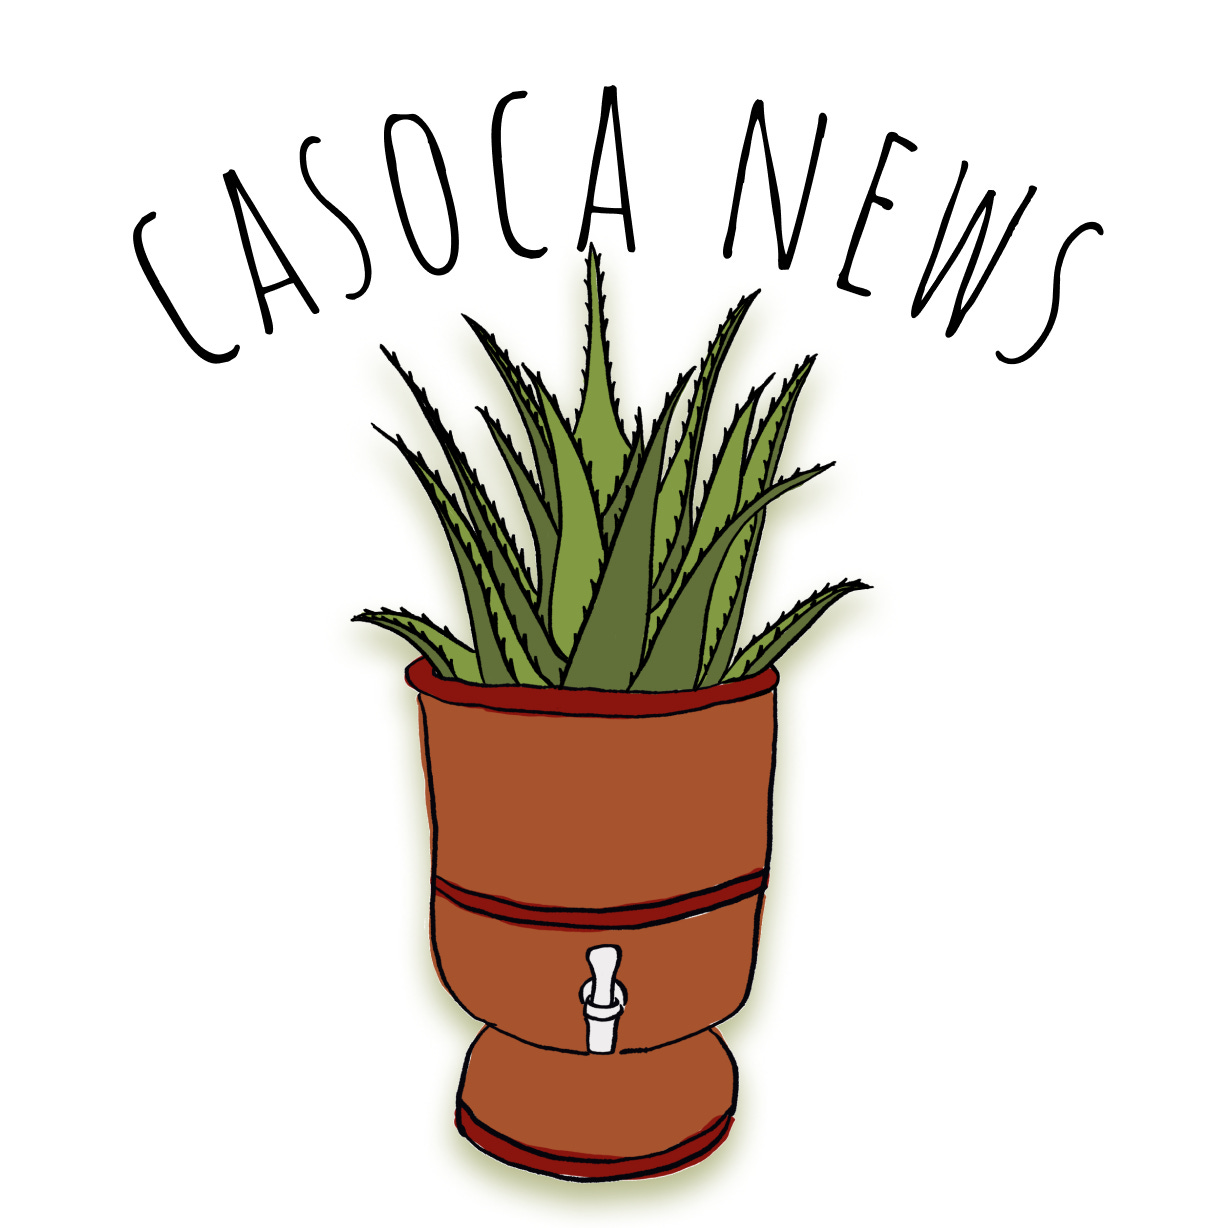 casoca news